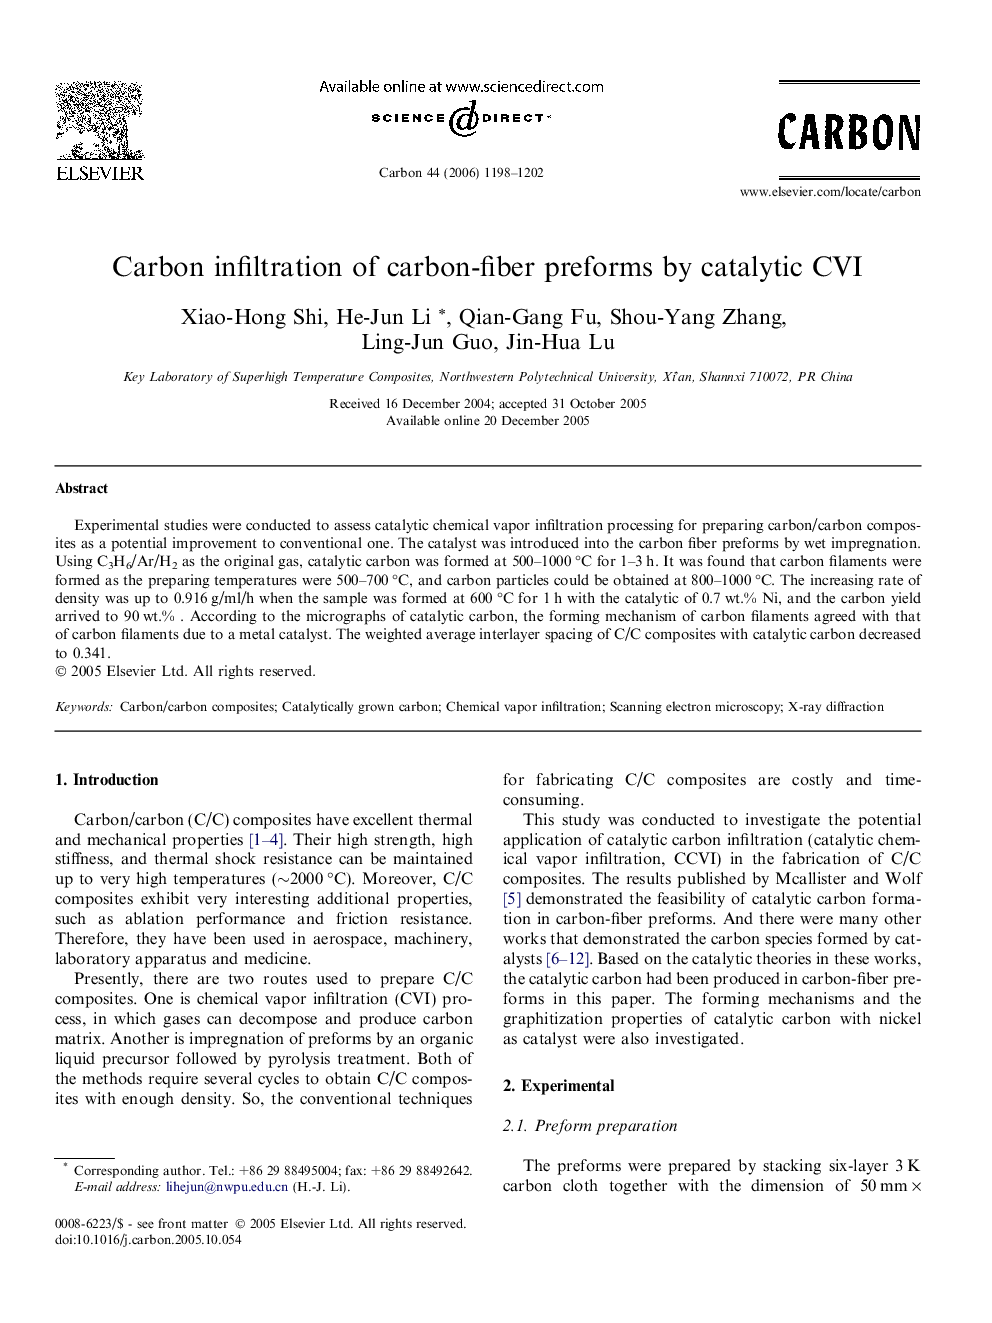 Carbon infiltration of carbon-fiber preforms by catalytic CVI